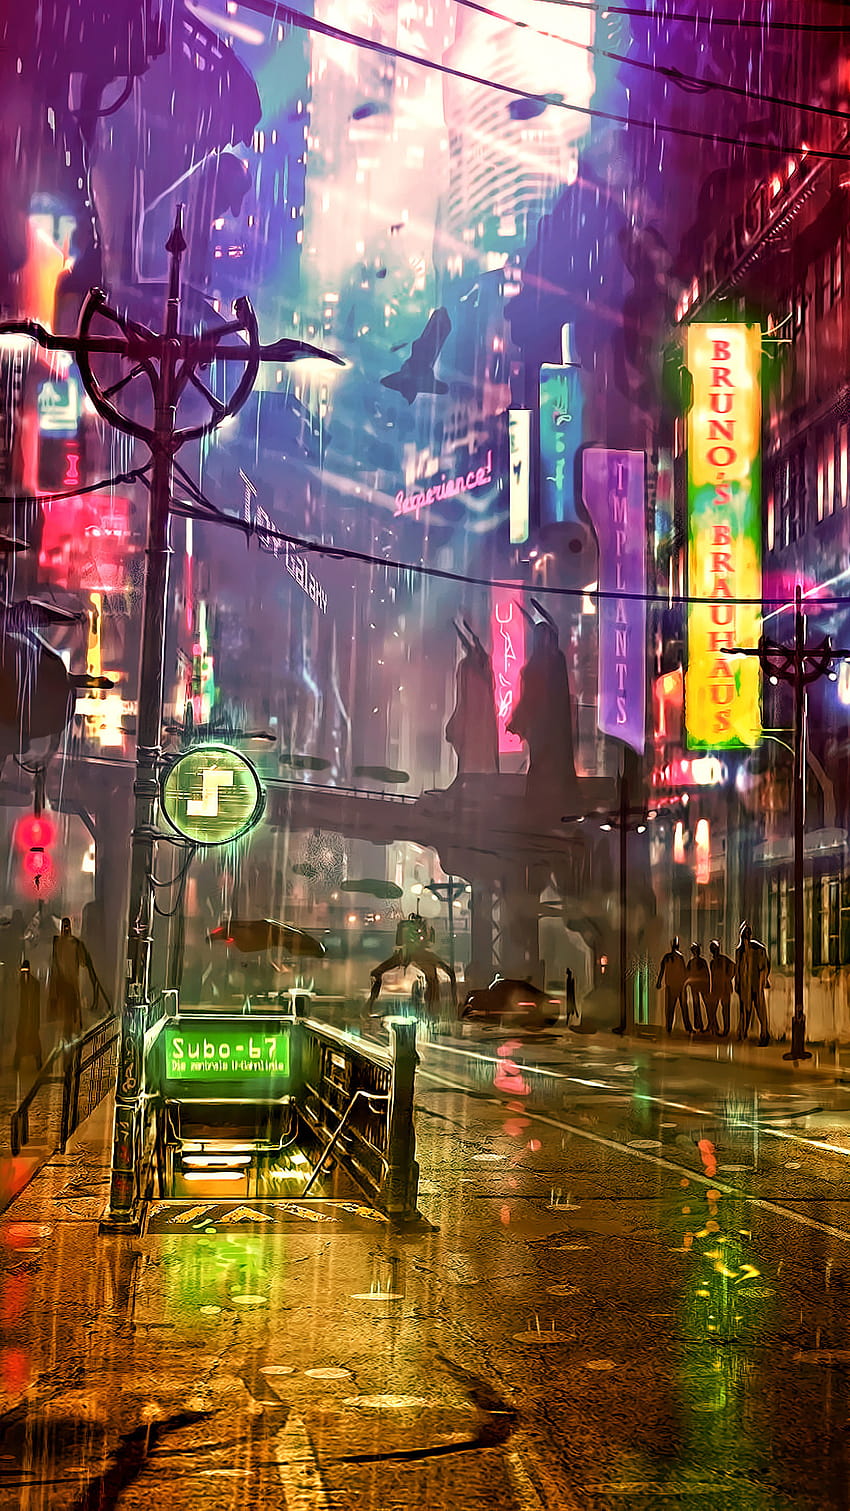 1080x1920 Città futuristica Cyberpunk Neon Street Arte digitale Iphone 7,6s,6 Plus, Pixel xl, One Plus 3,3t,5, Sfondi e telefono pixel art Sfondo del telefono HD